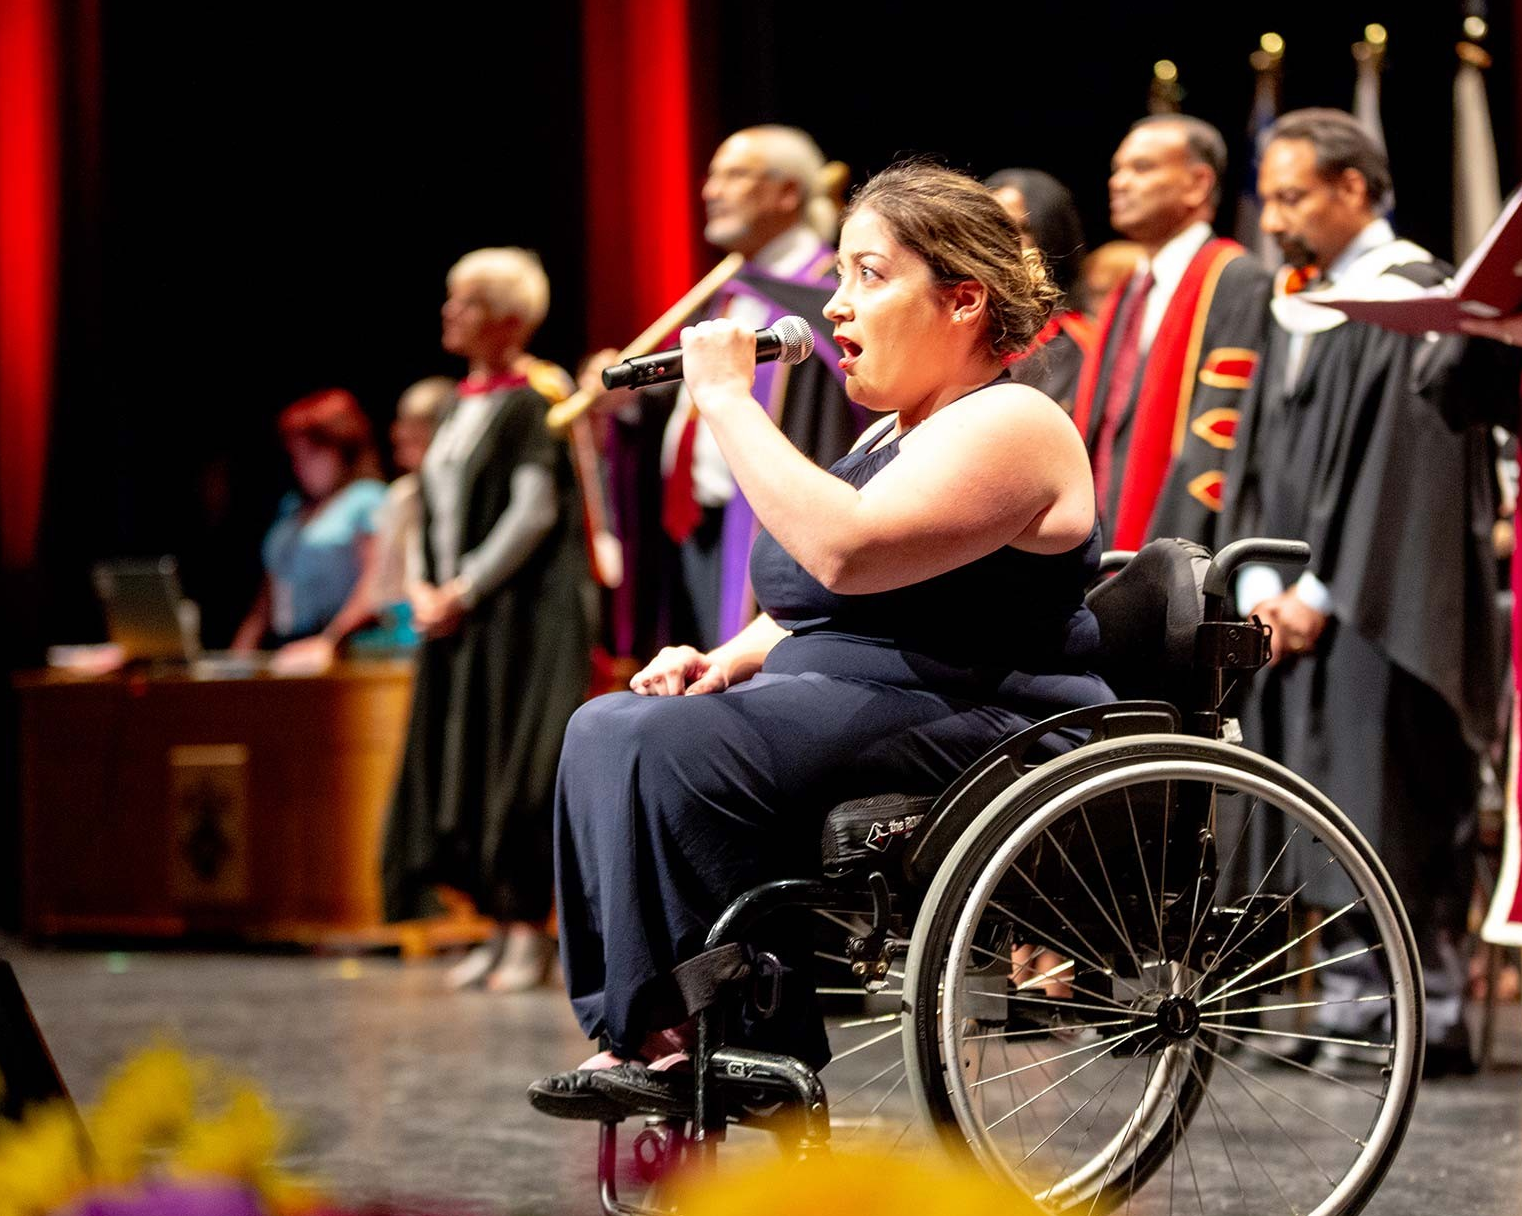 Mezzo-soprano Colleen Bartley’s voice knows no boundaries despite her disabilities